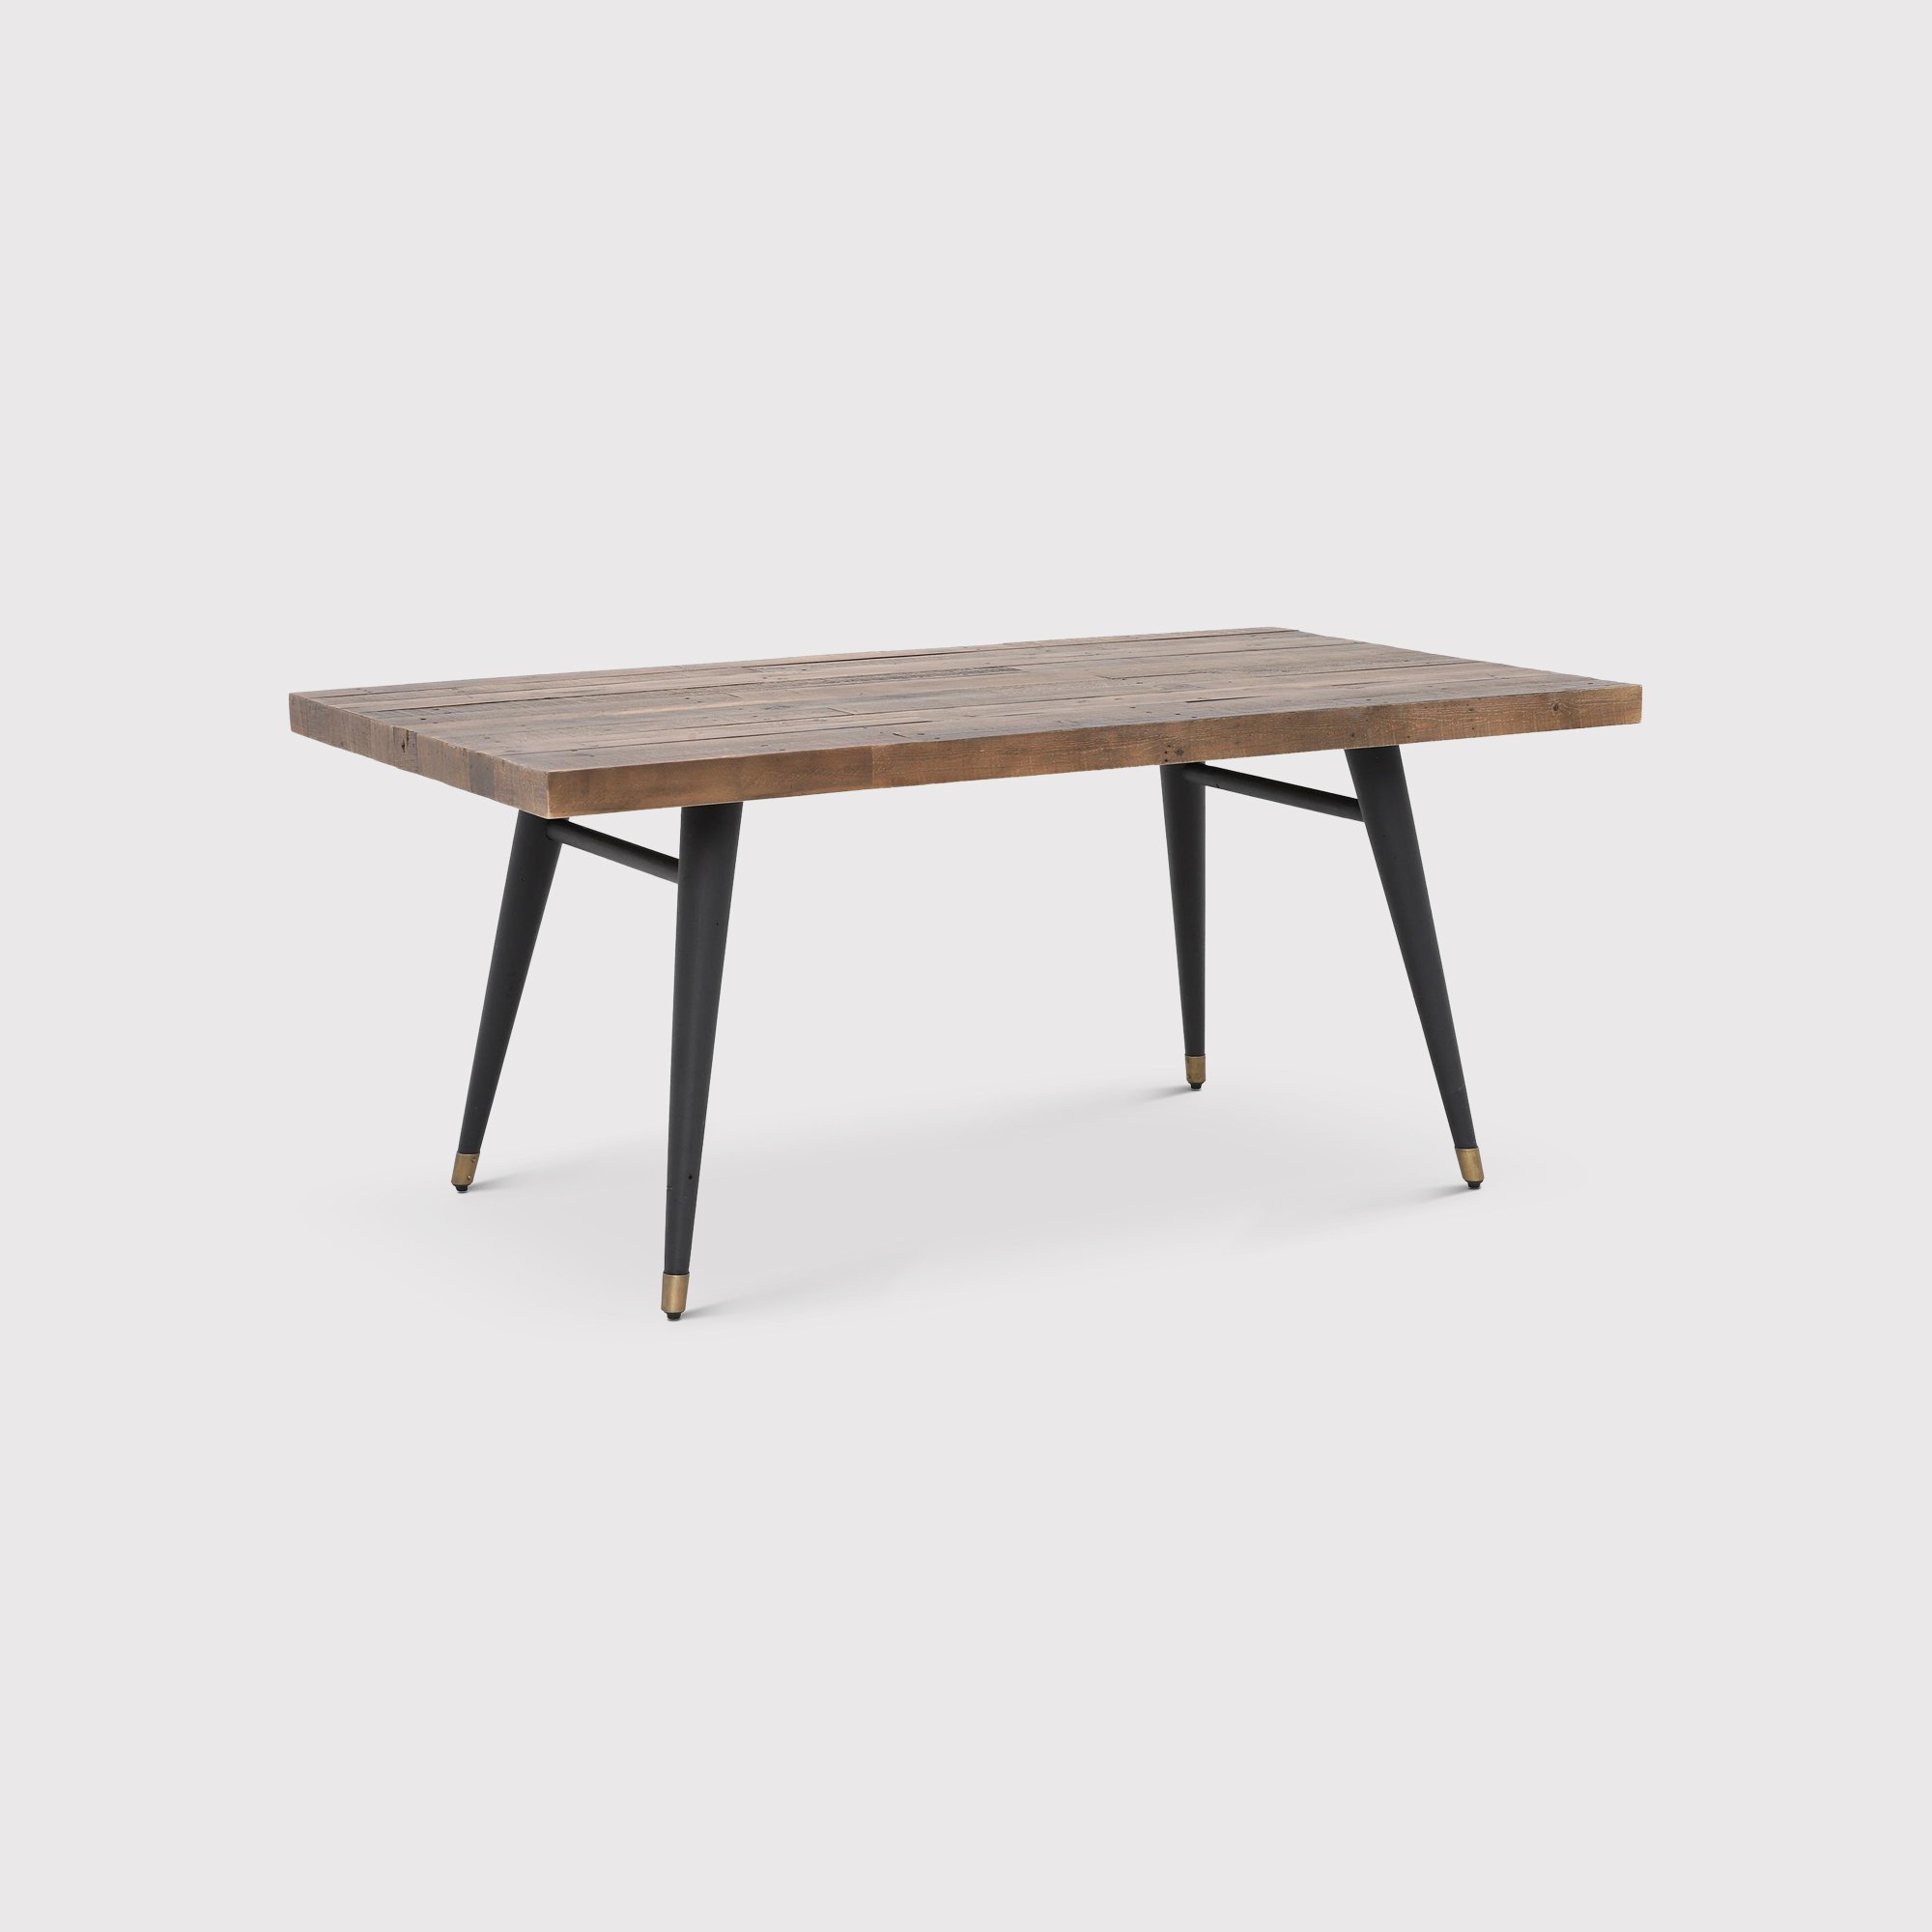 Photo of Modi fixed table top 77x180x100cm in brown